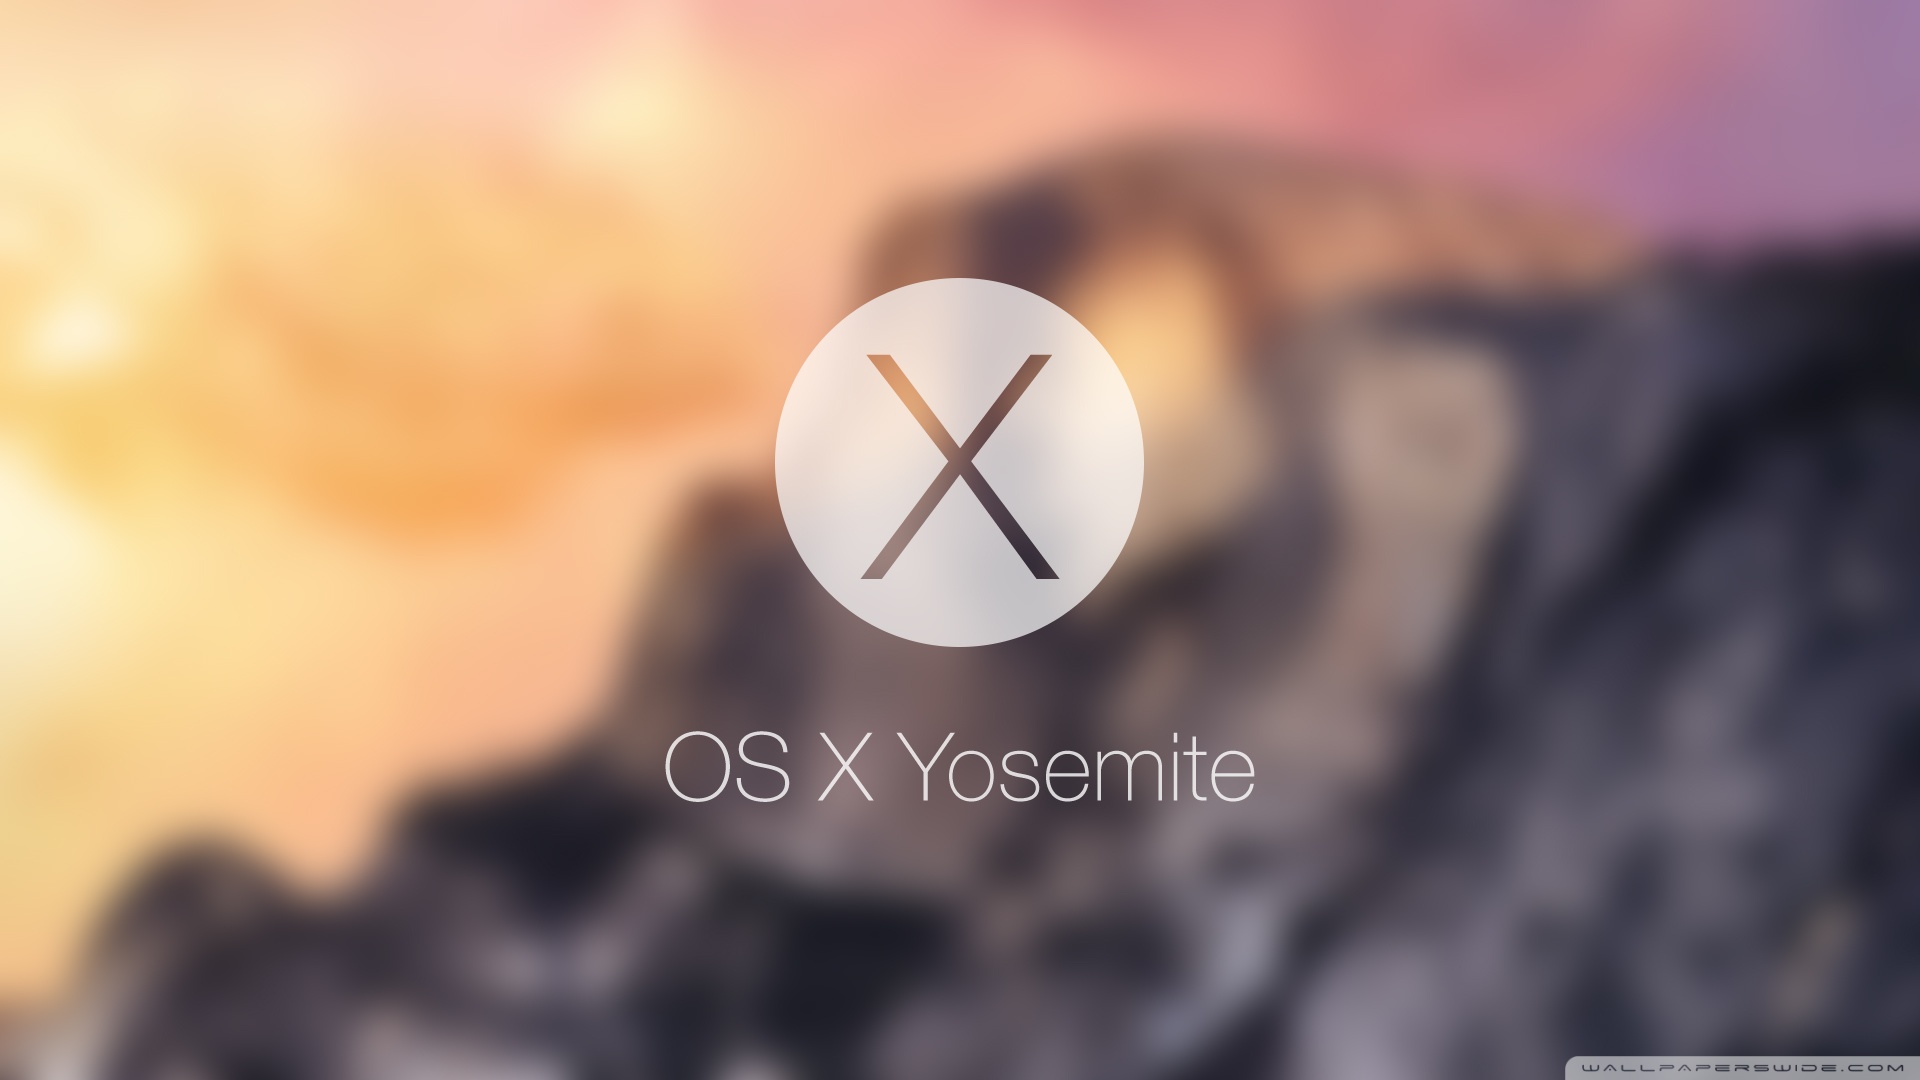 osx yosemite free for macbook pro2